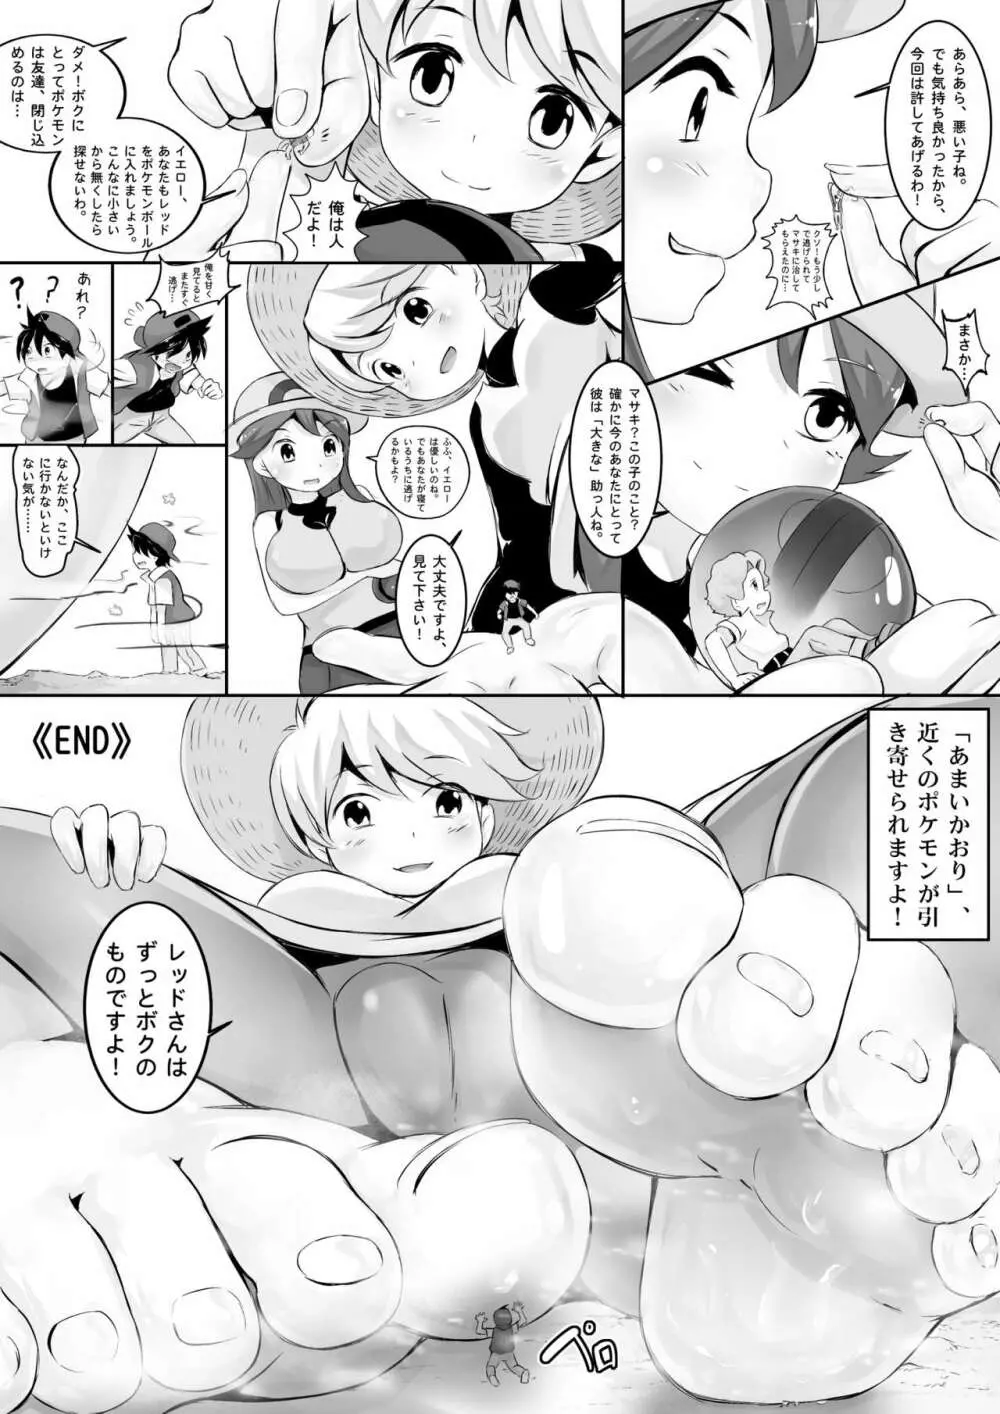 Pokemon GS Friend?! - page17